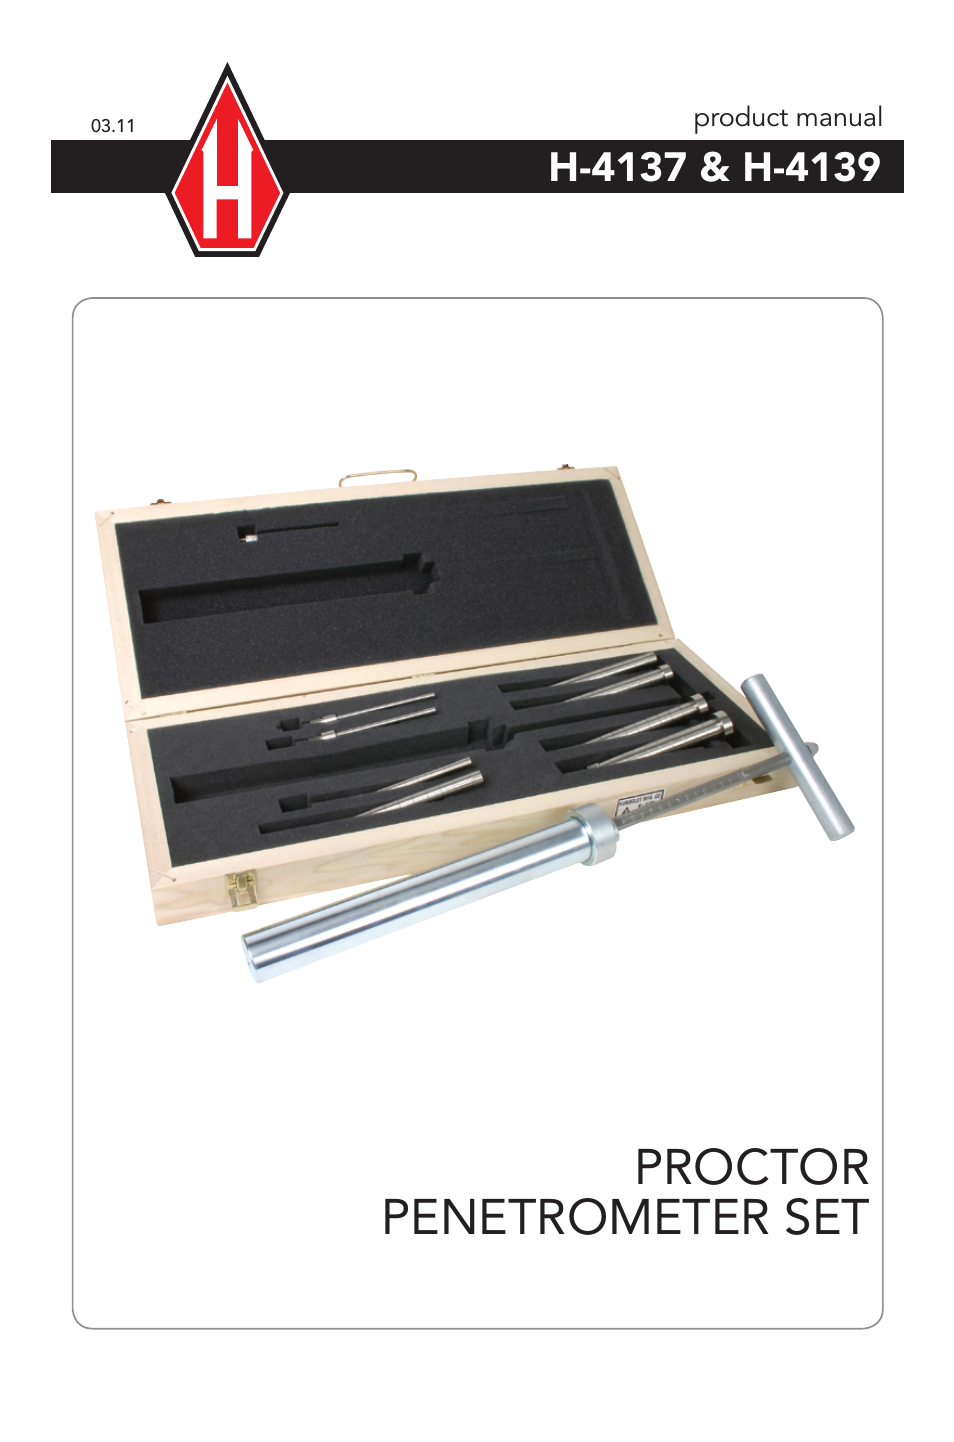 H-4139 Proctor Penetrometer Set